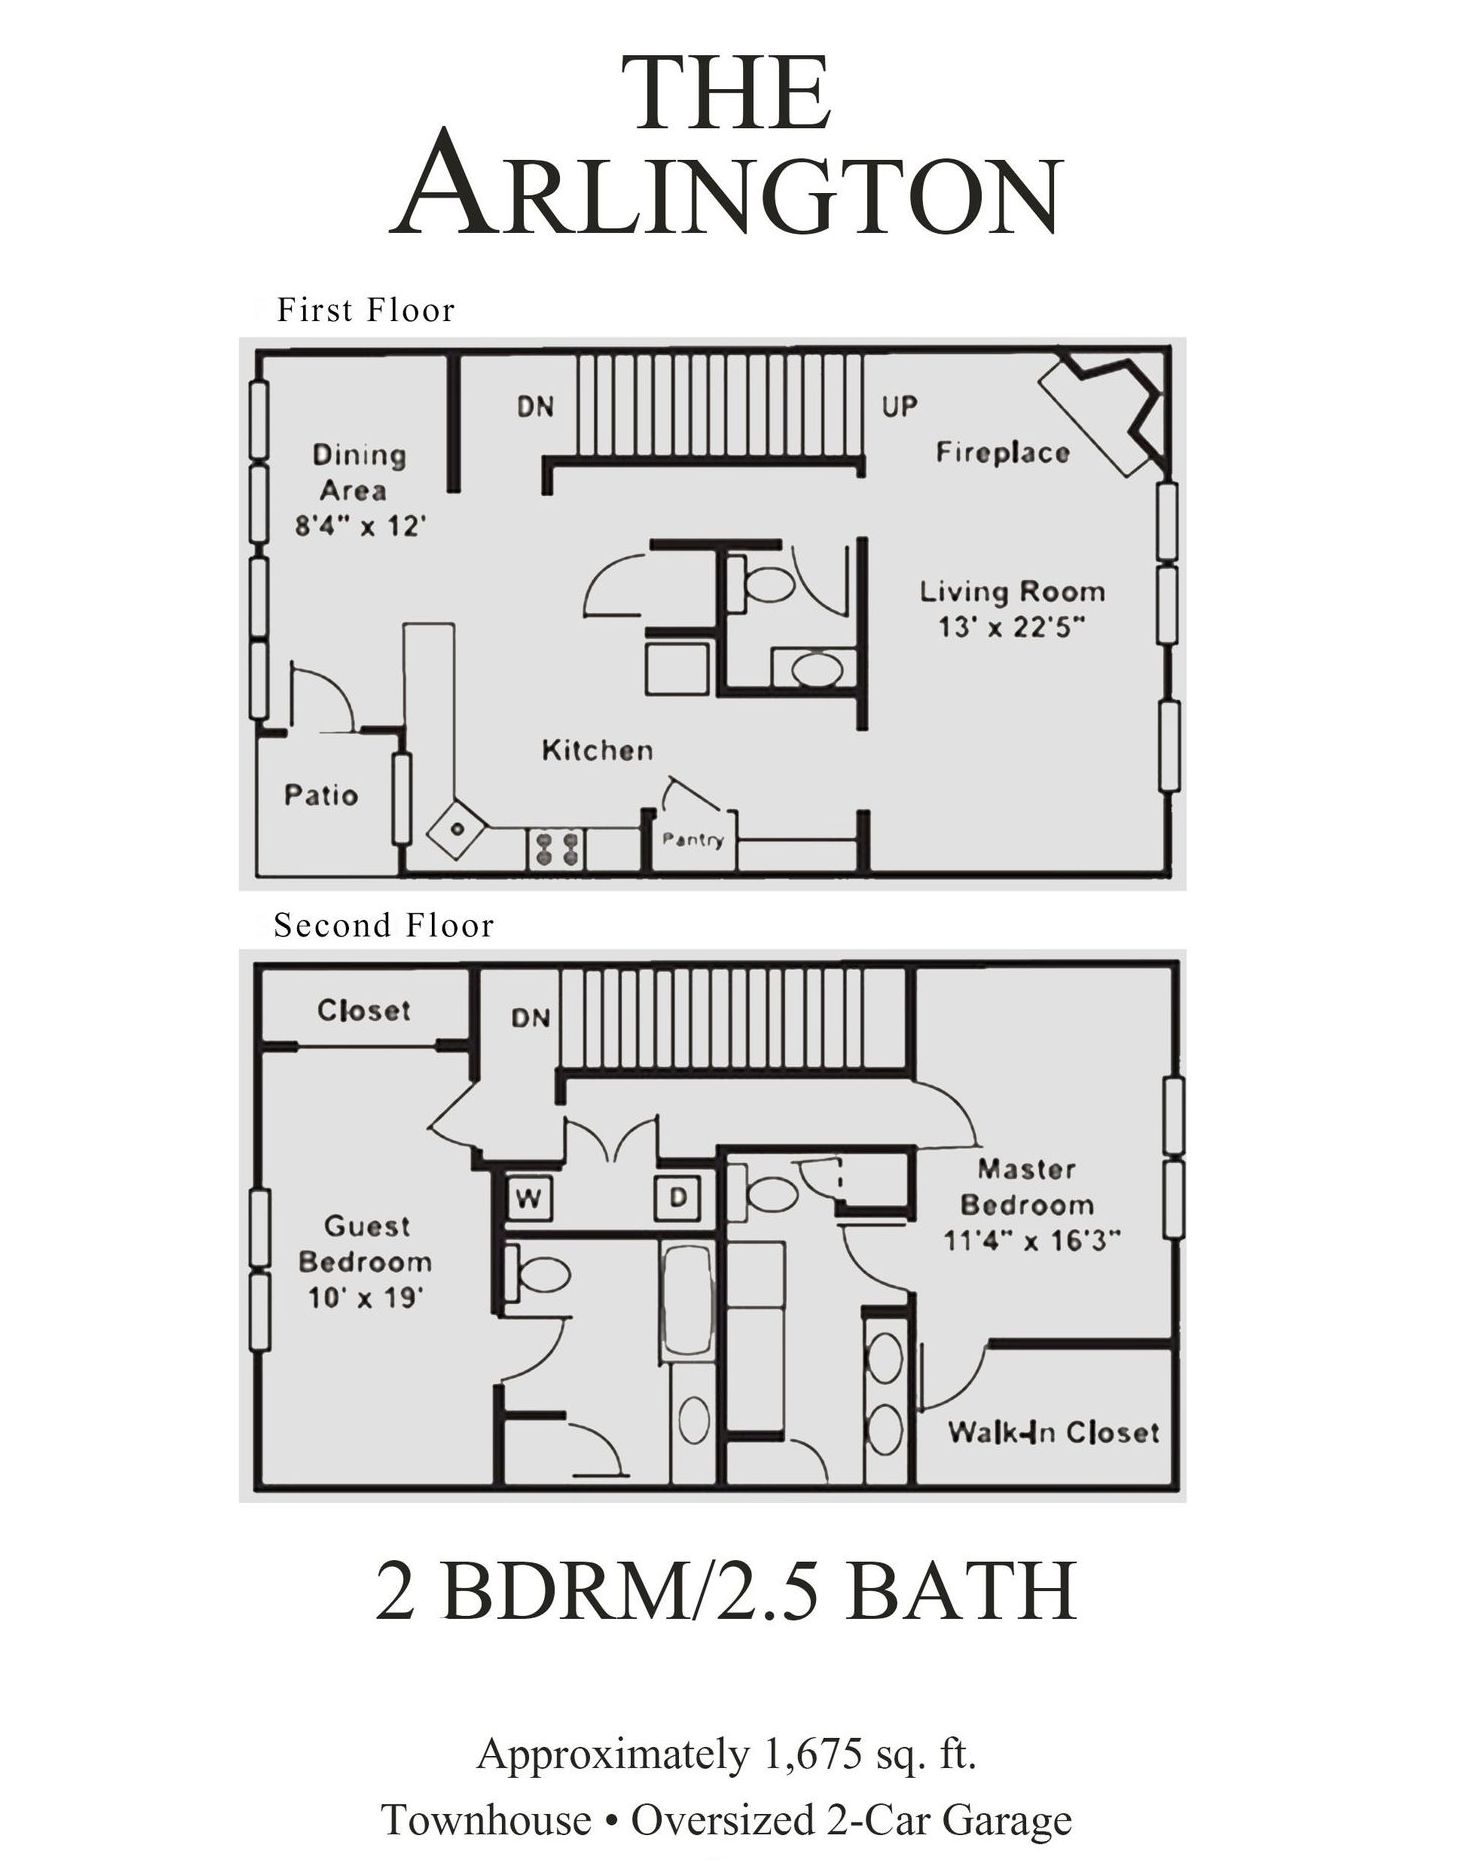 Arlington floor plan drawing